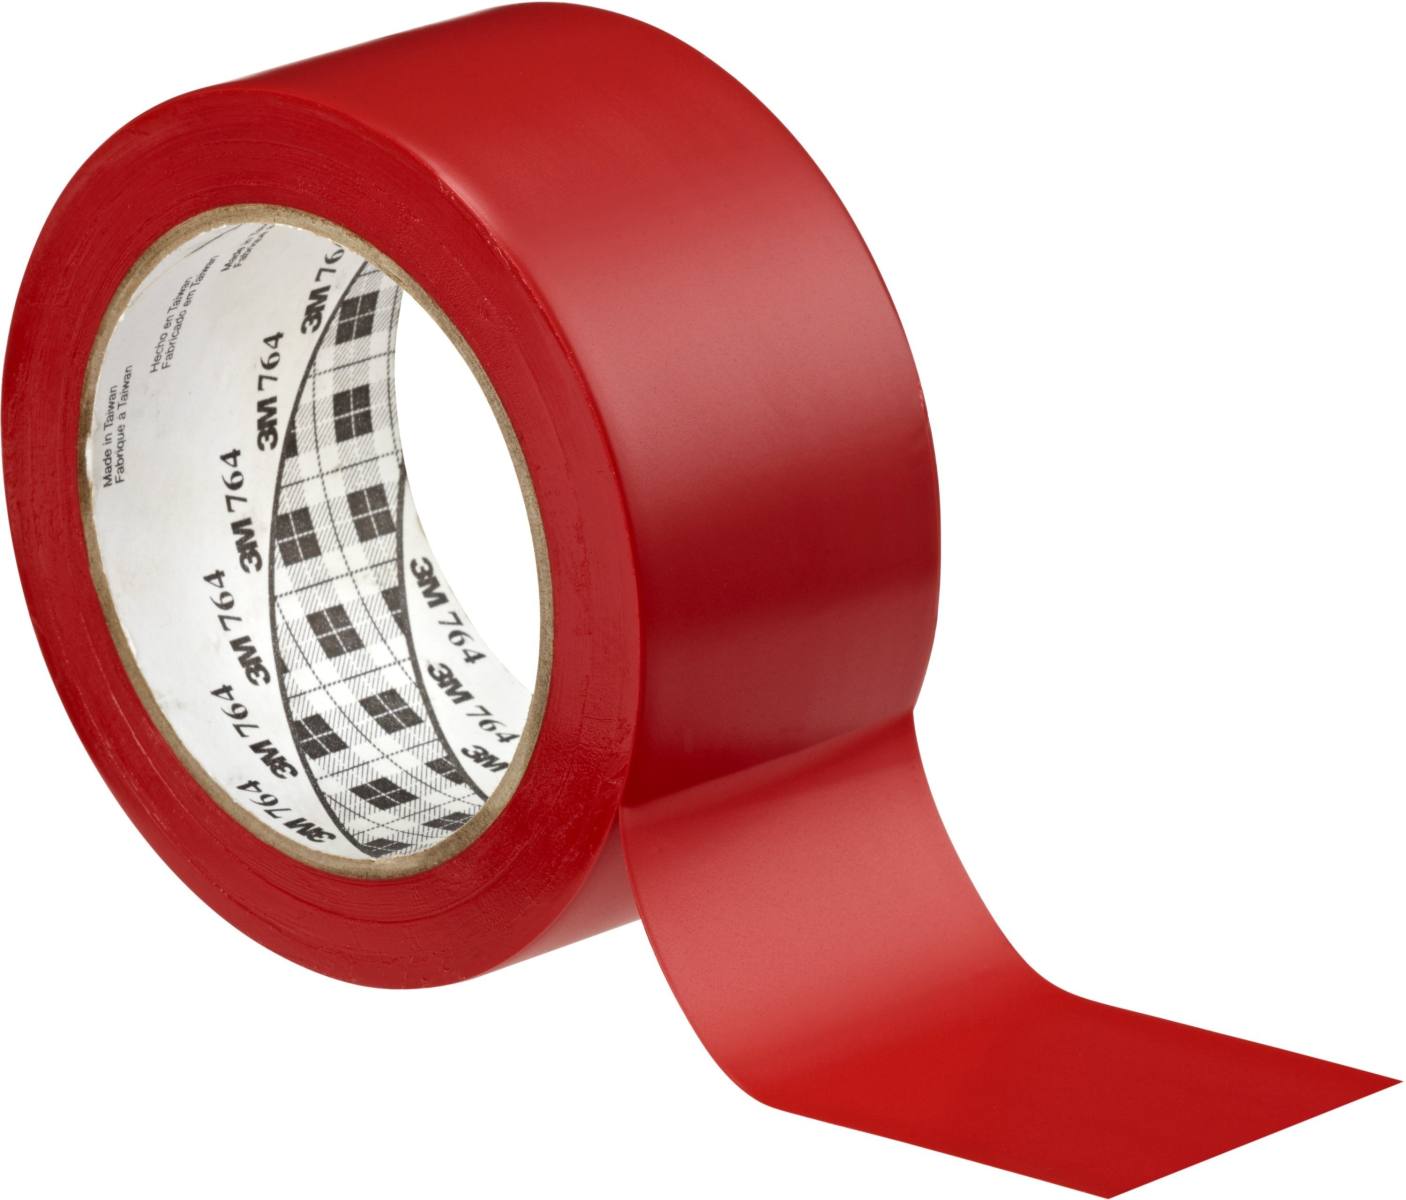 3M universele PVC kleefband 764, rood, 50 mm x 33 m, individueel verpakt voor gebruiksgemak